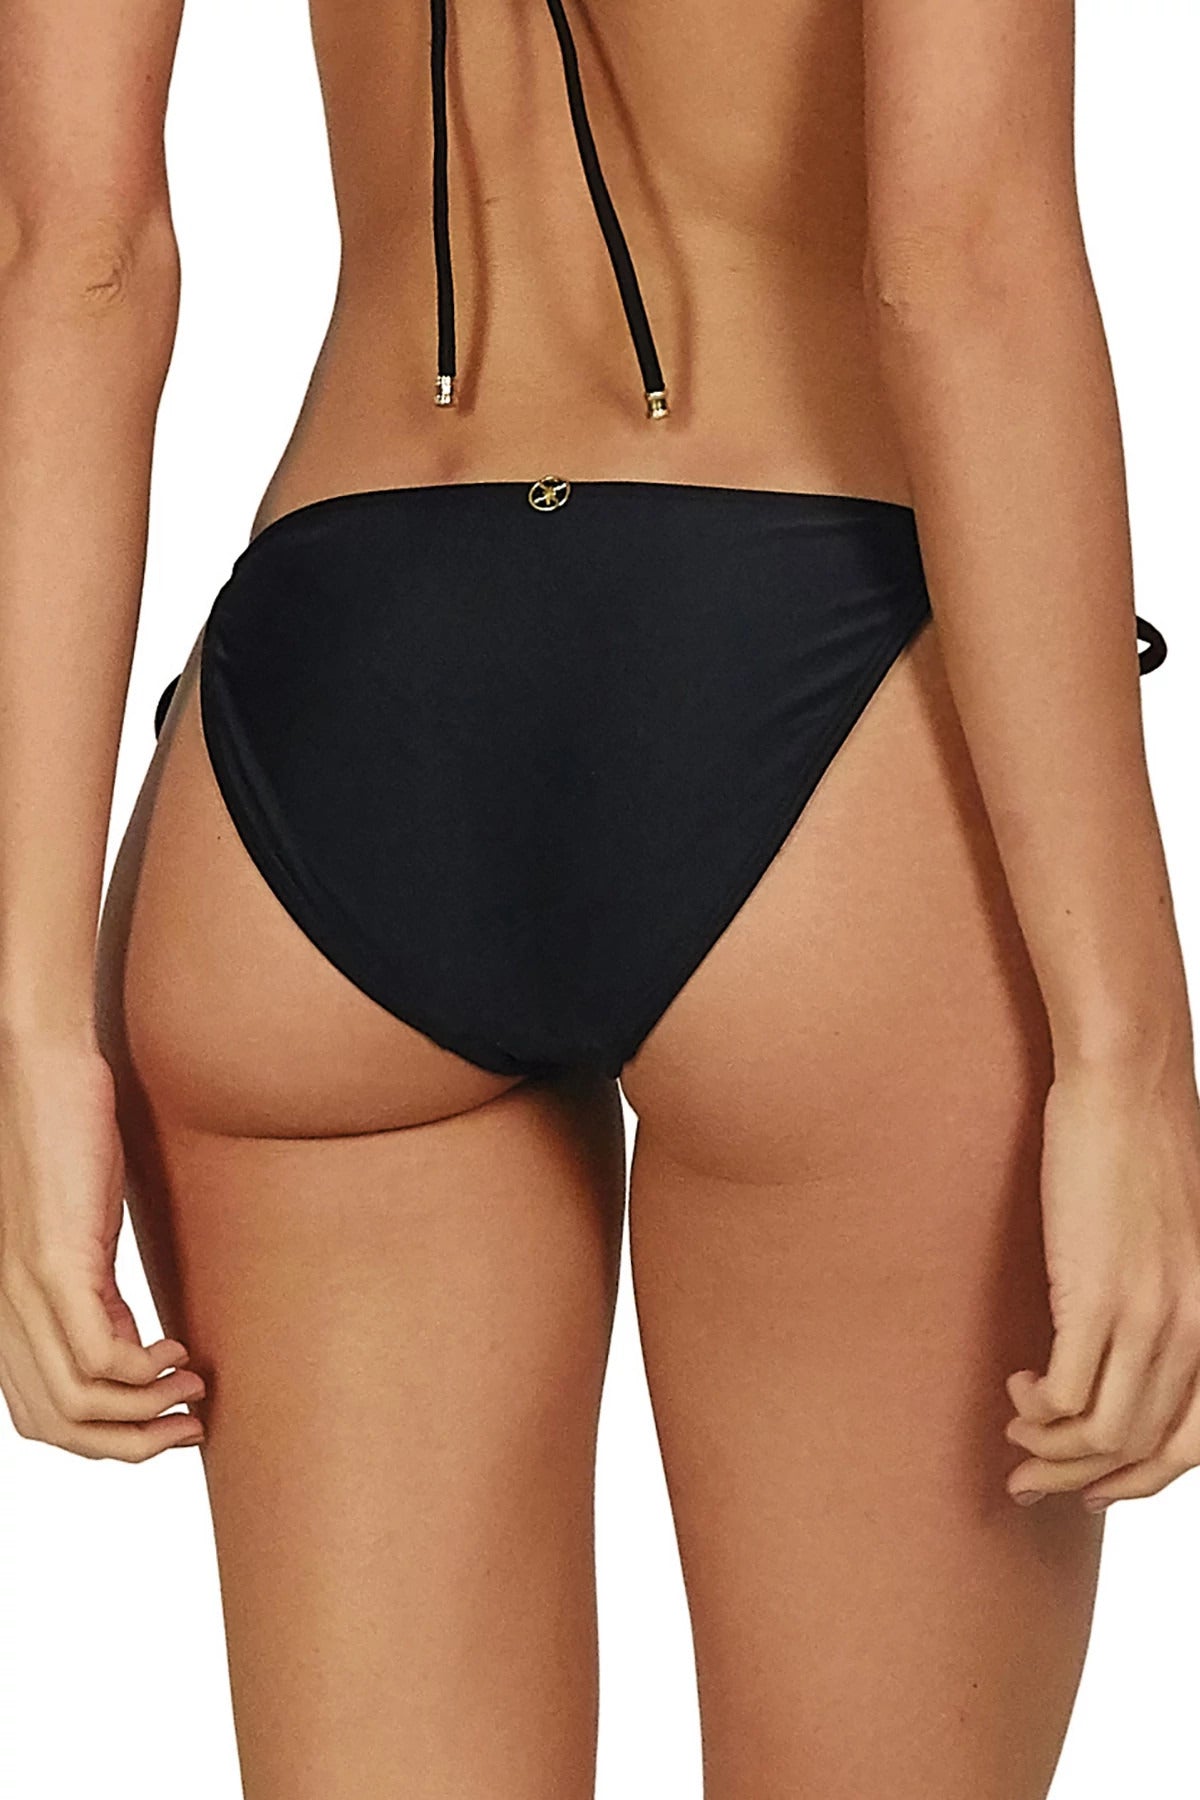 Vix Swimwear Women's Side Tie Hipster Bikini Bottom